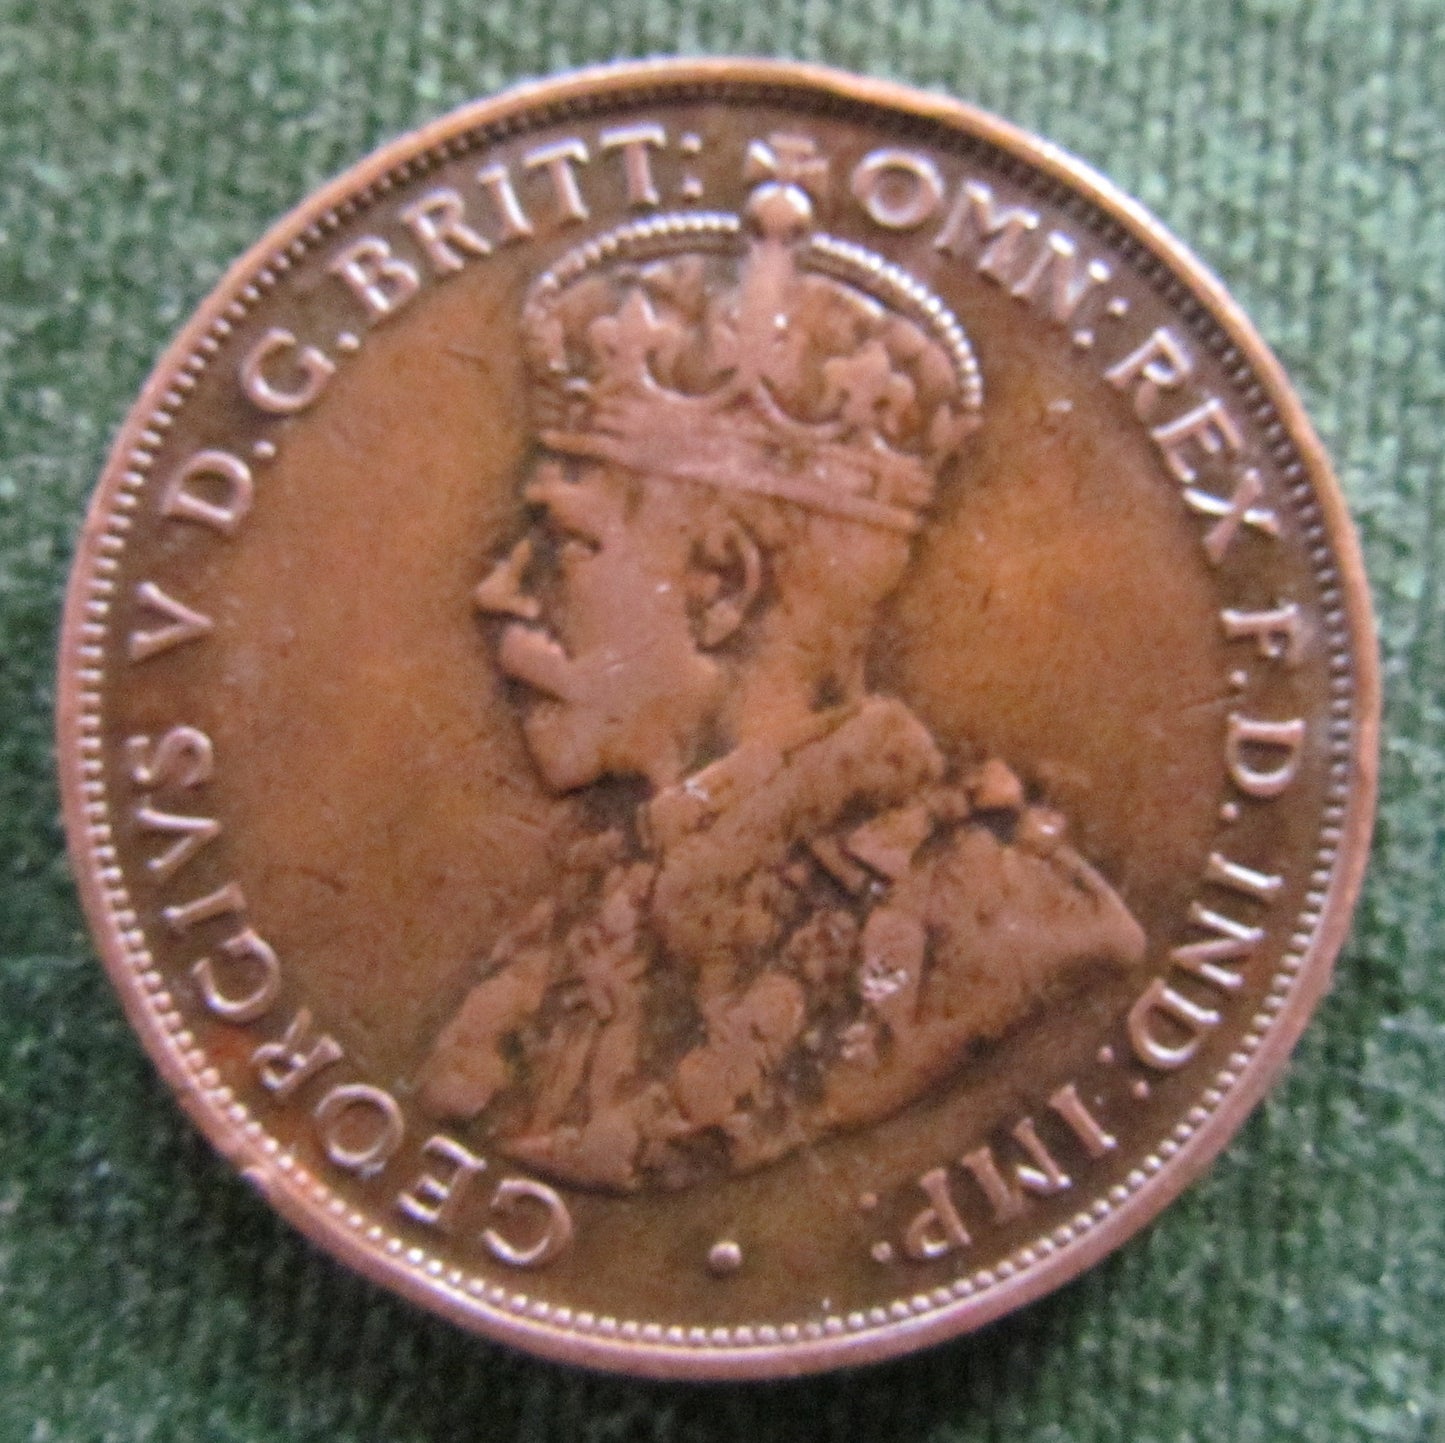 Australian 1933 1d 1 Penny King George V Coin - Variety Die Error